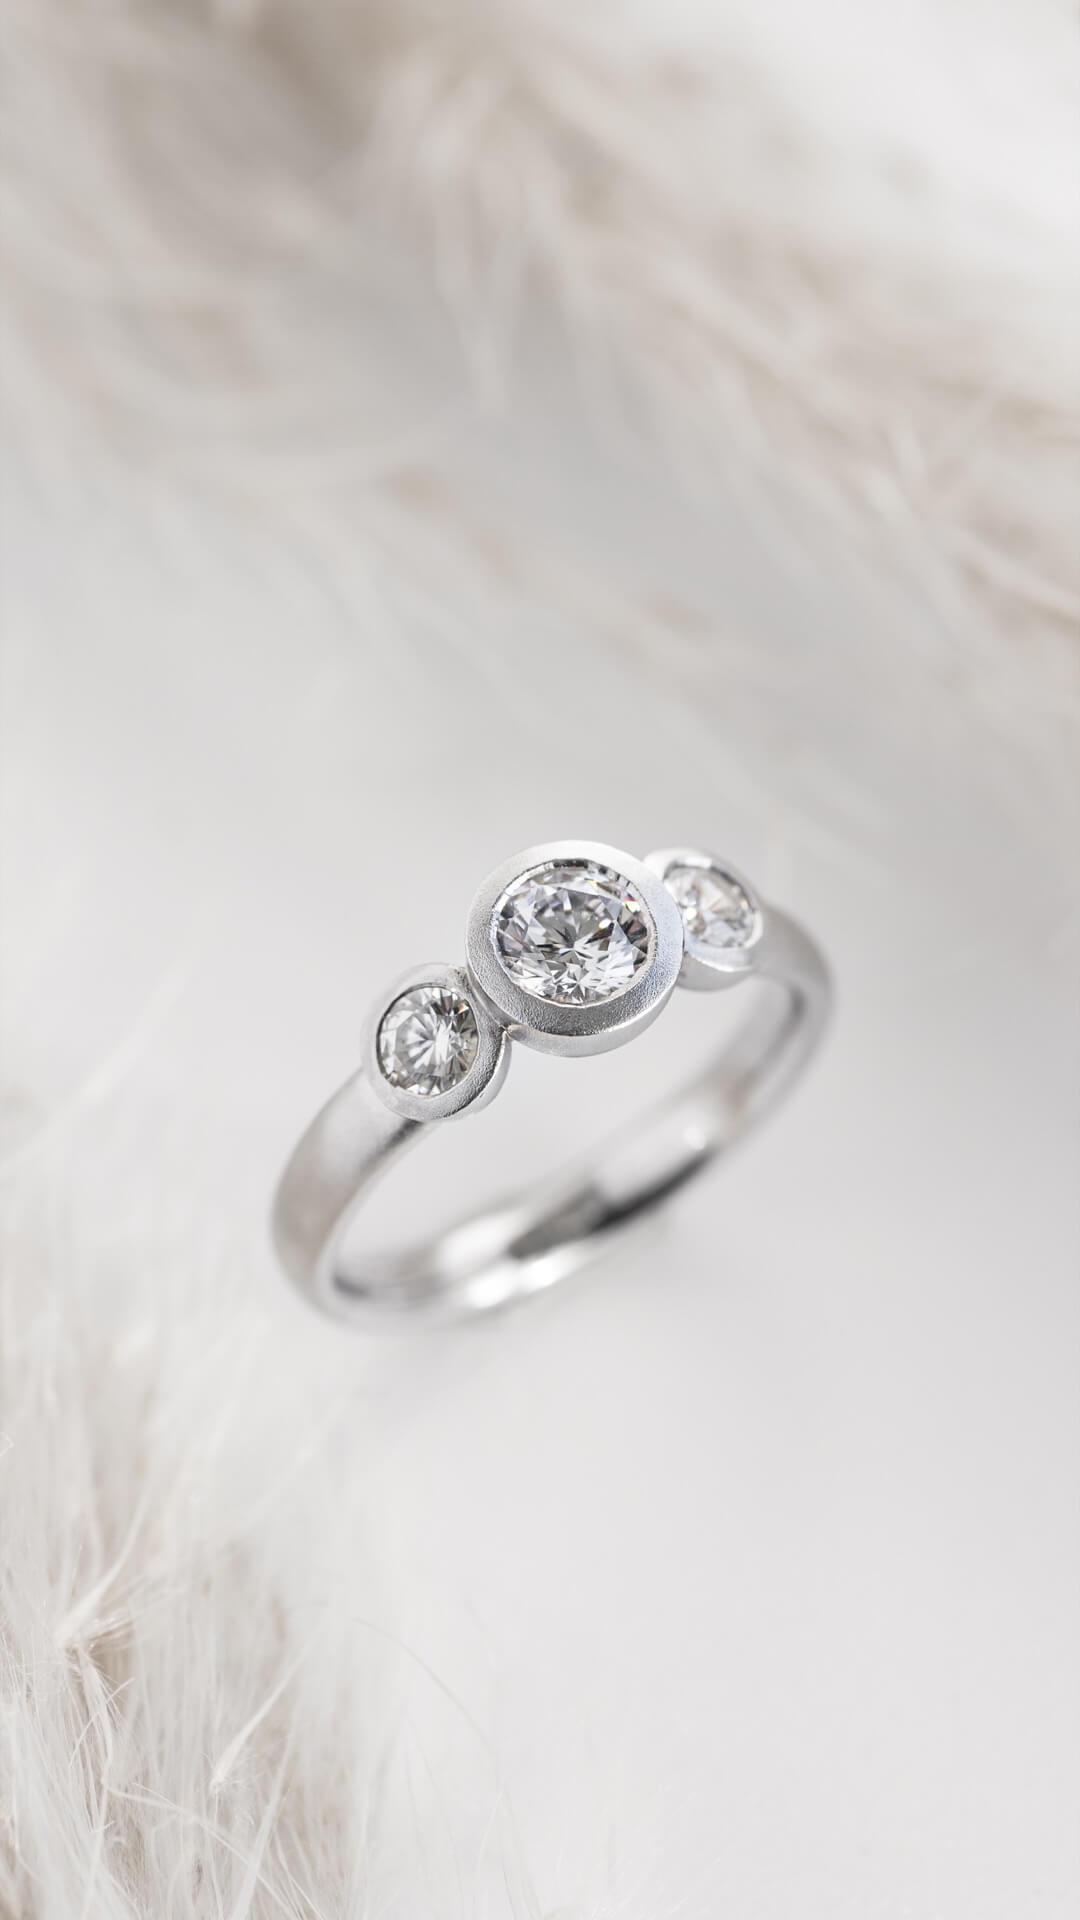 Grand diamond Trilogy Ring by Jacks Turner | Contemporary Jewellery Bristol